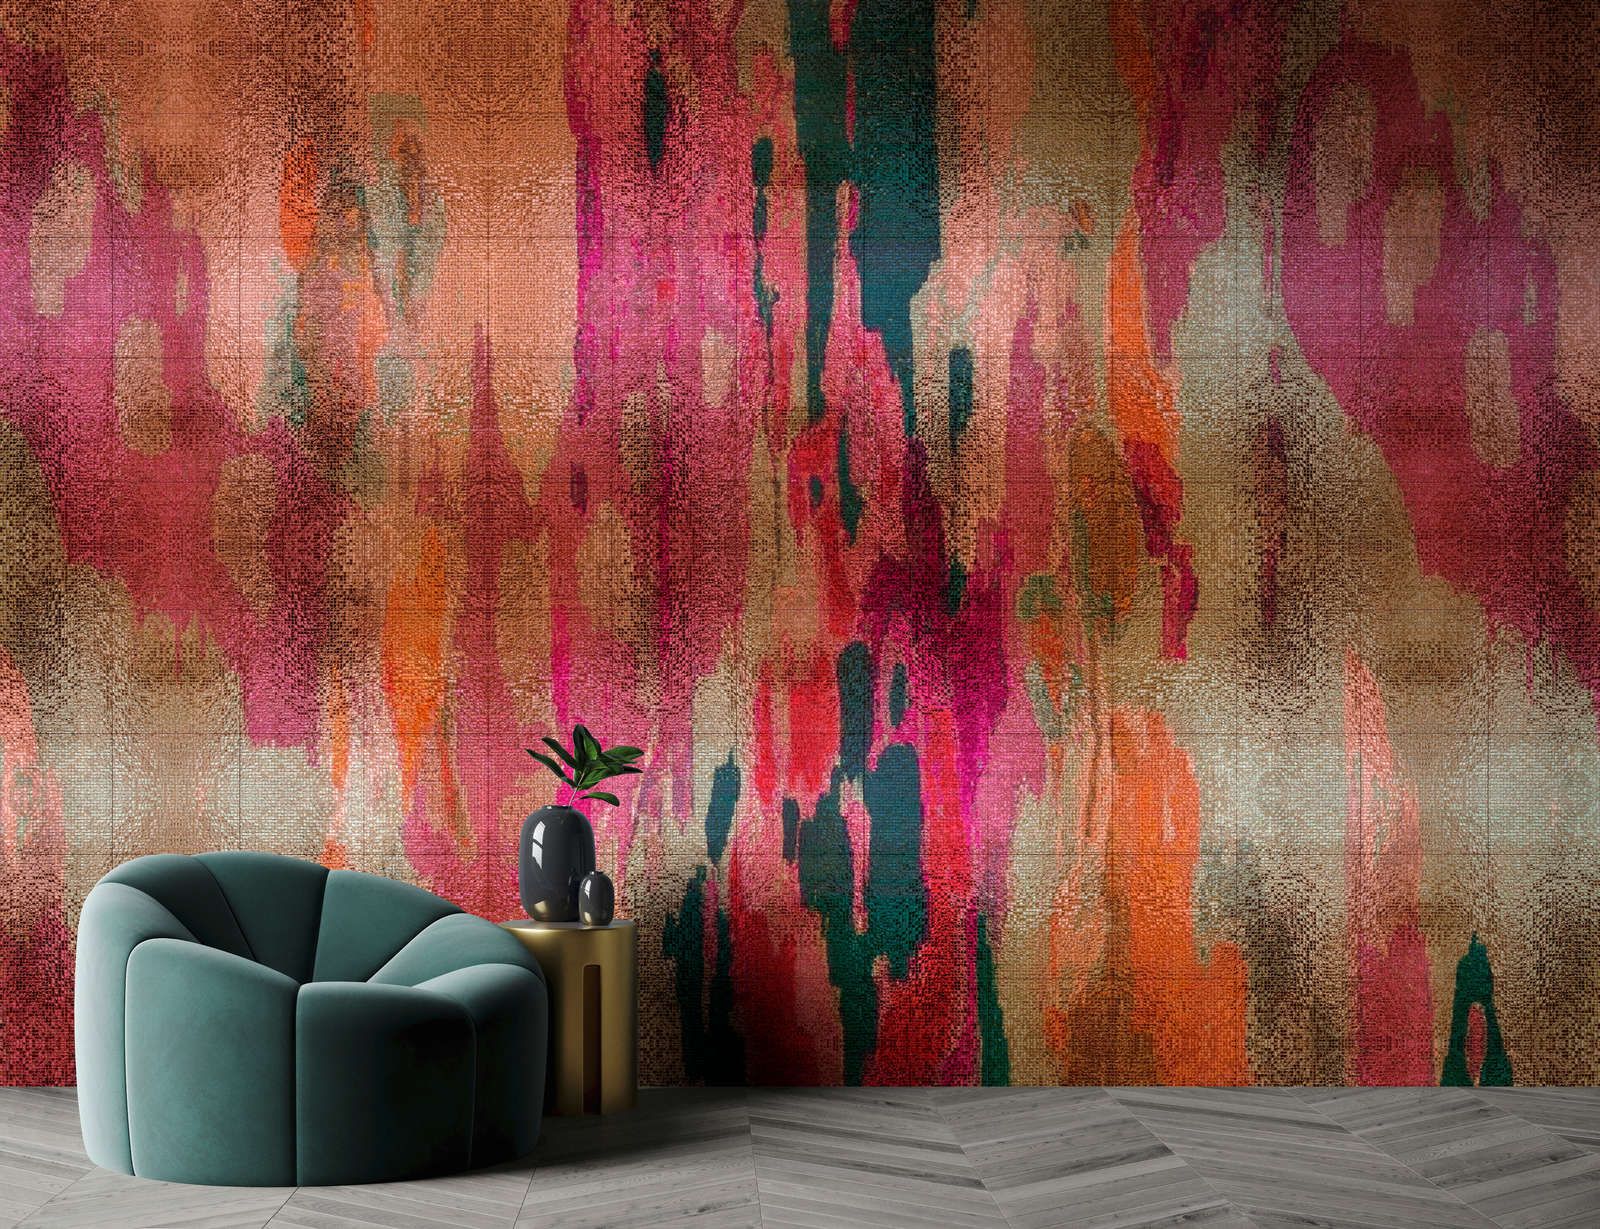             Photo wallpaper »marielle 2« - colour gradients violet, orange, petrol with mosaic structure - matt, smooth non-woven fabric
        